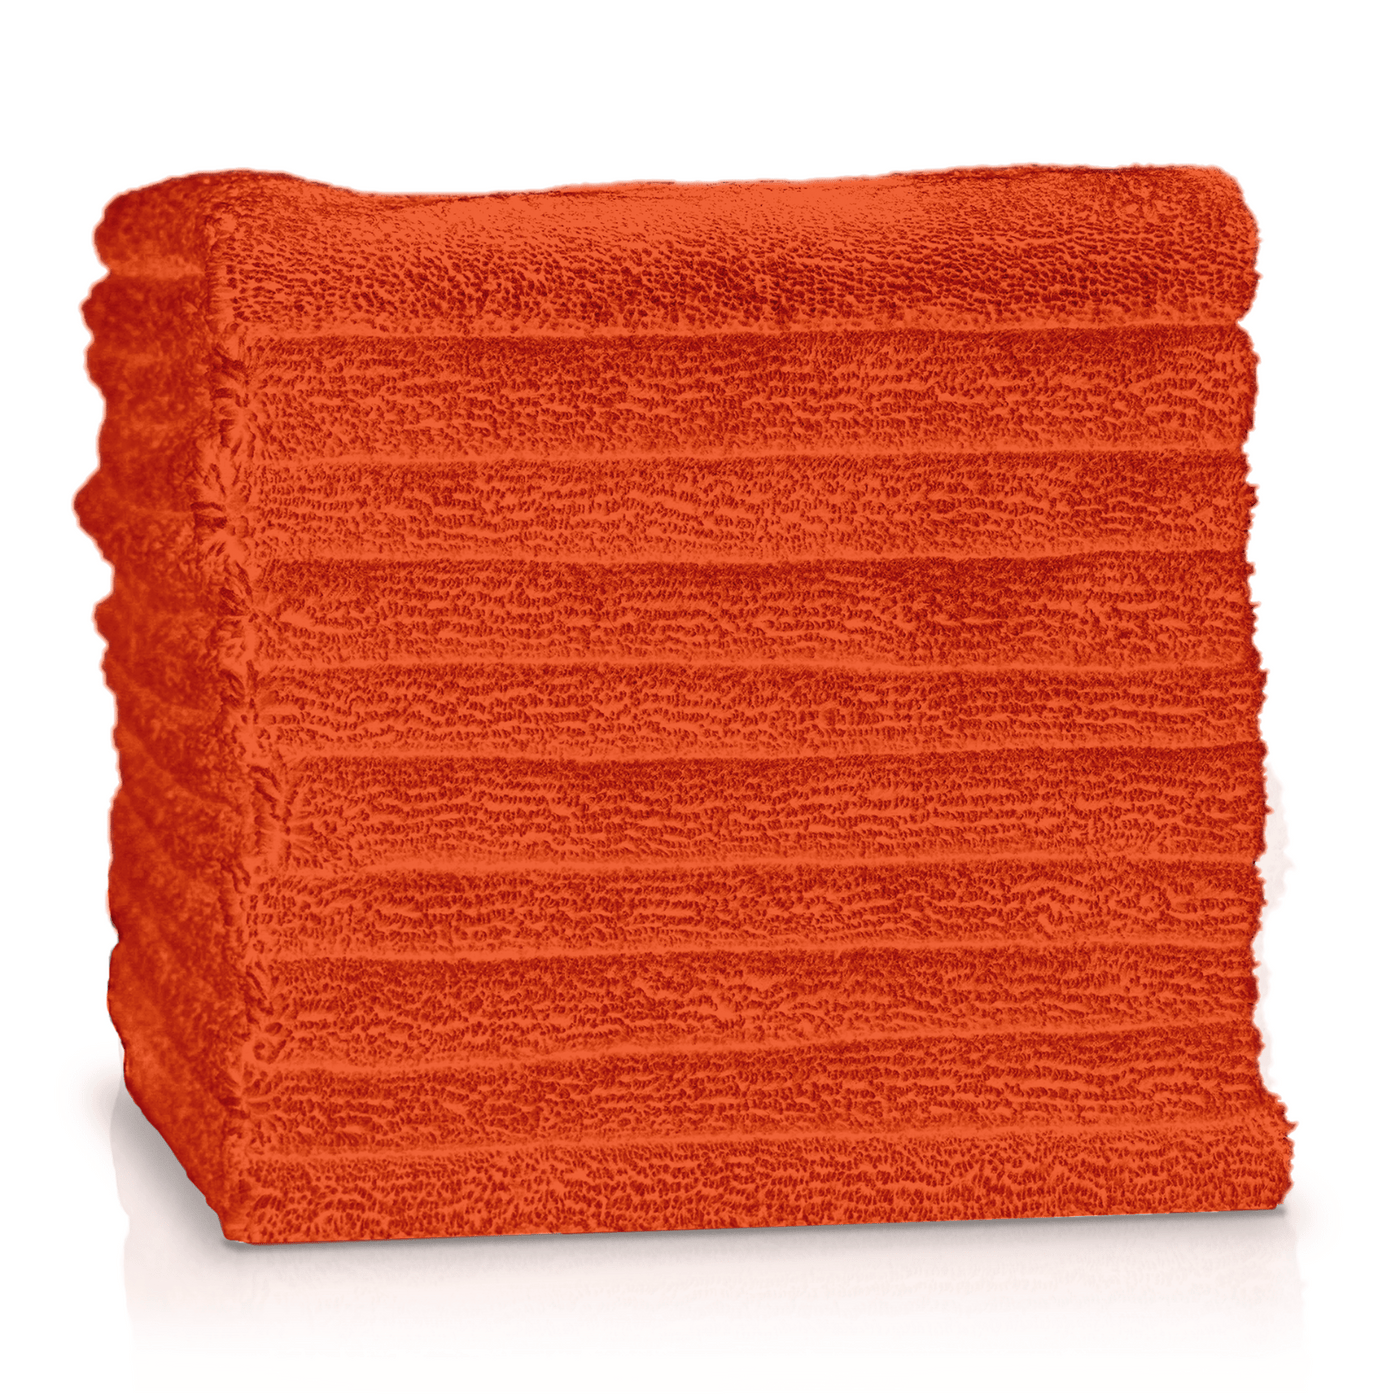 460 GSM Edgeless Microfiber Towel - Orange